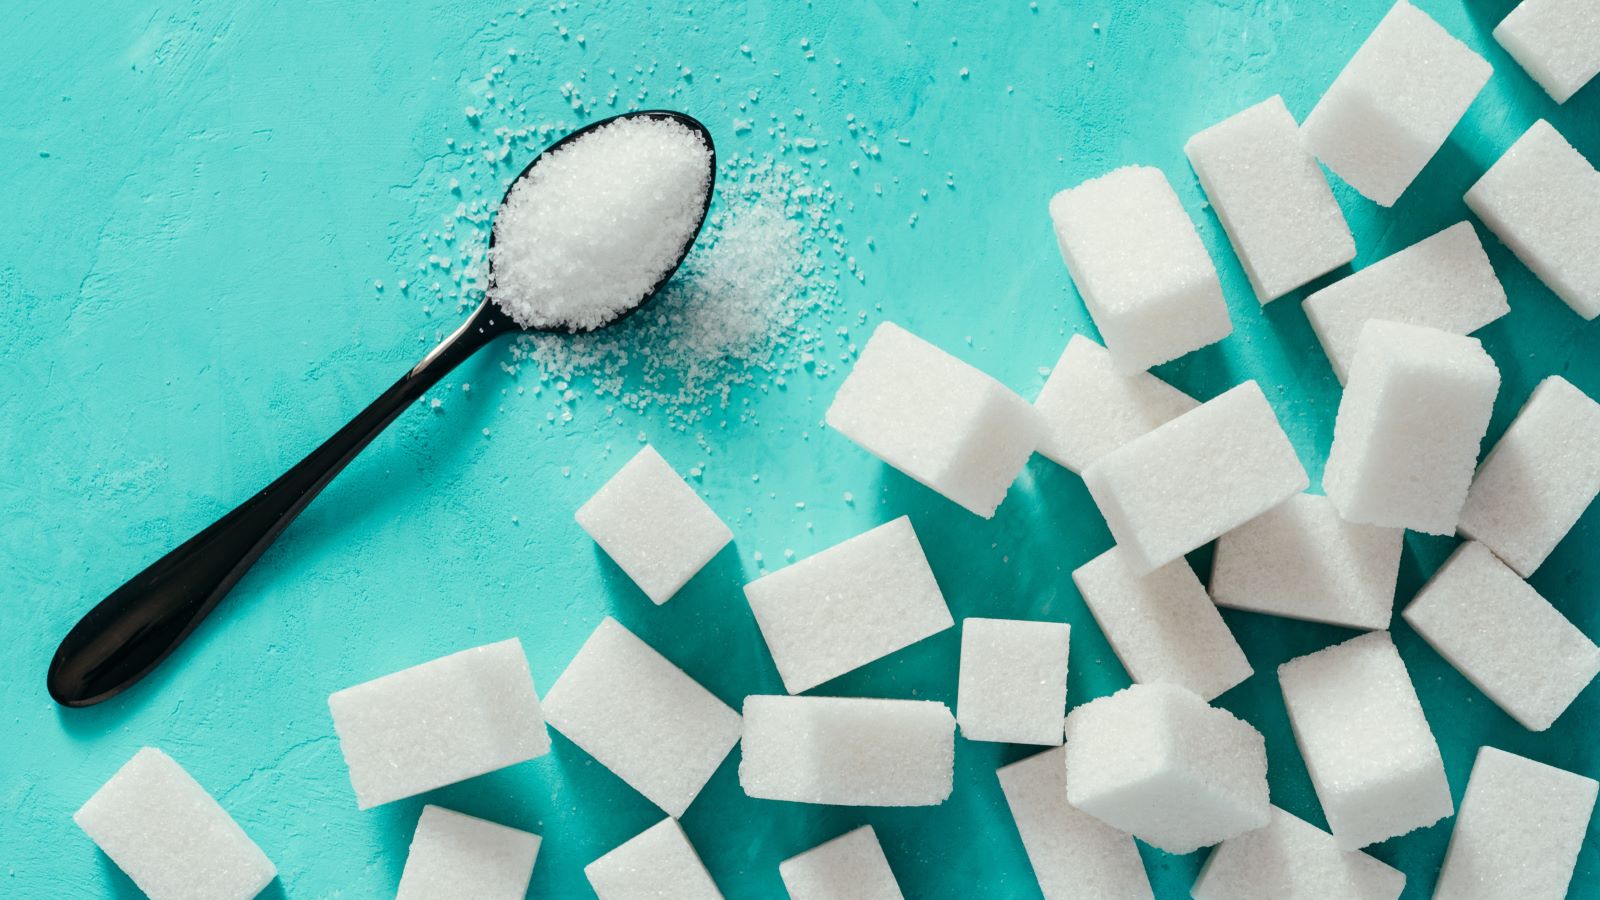 Does Sugar Cause Cancer?